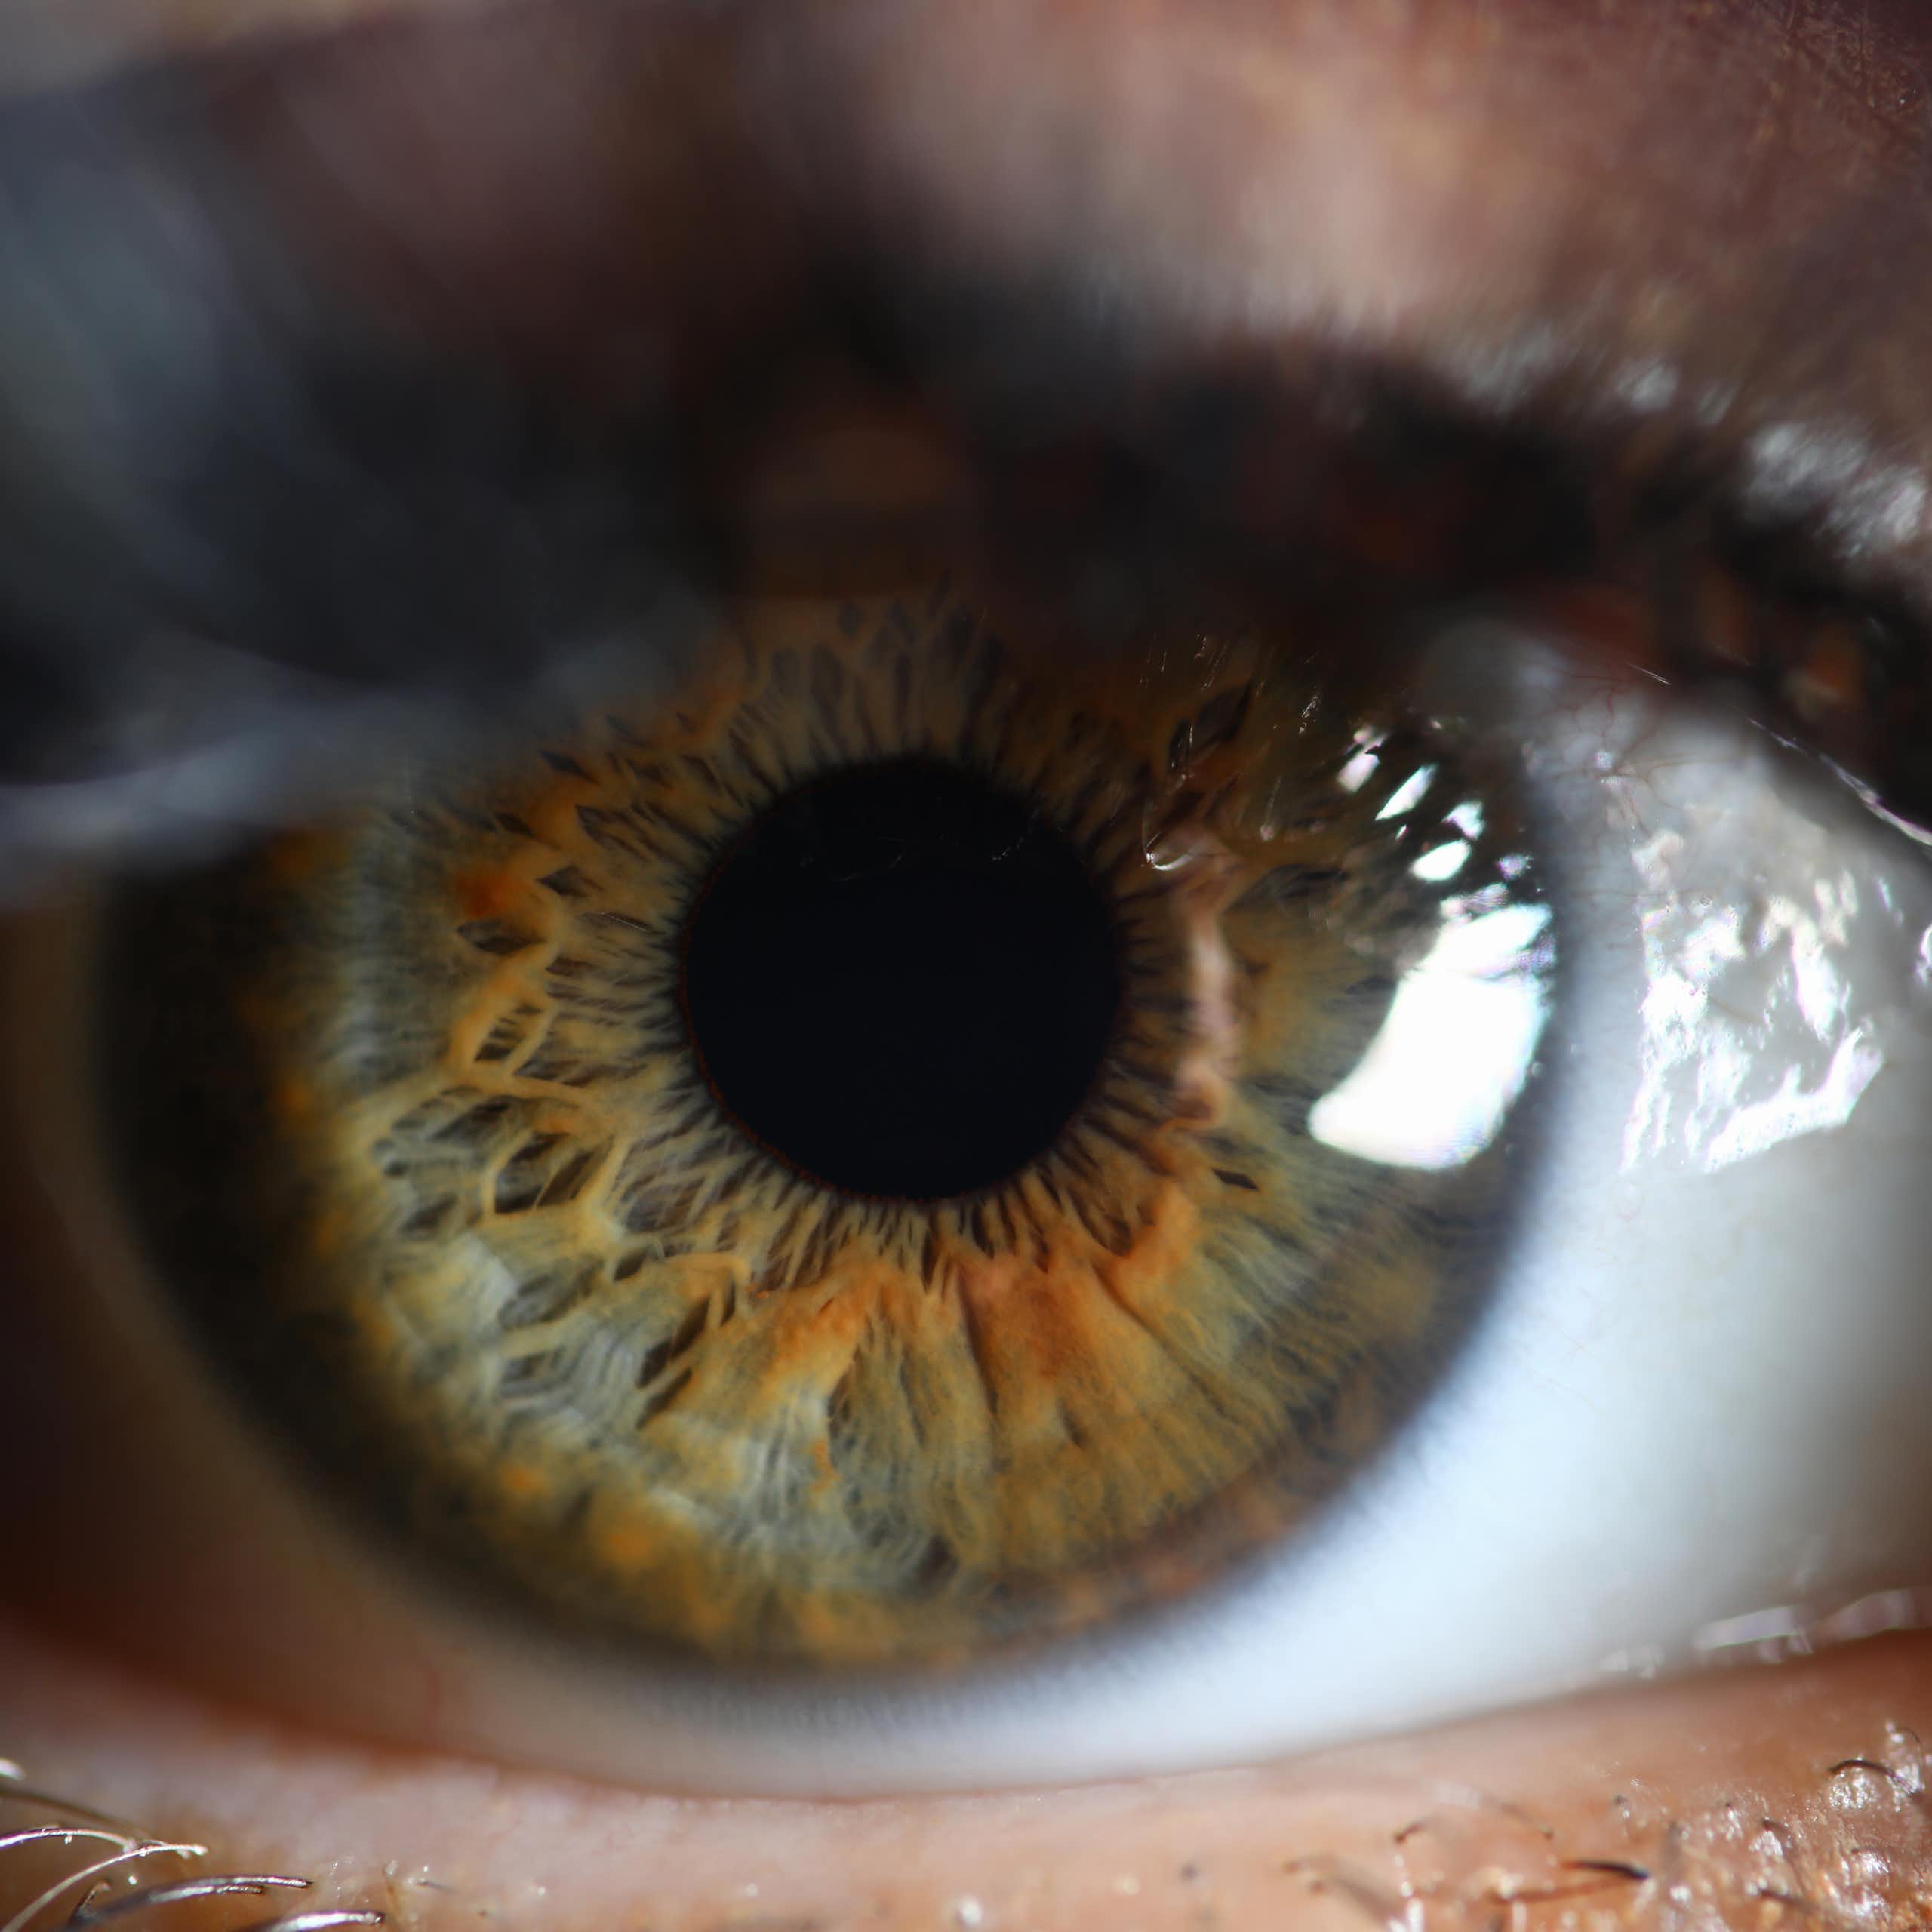 A close-up photograph of a green eye.